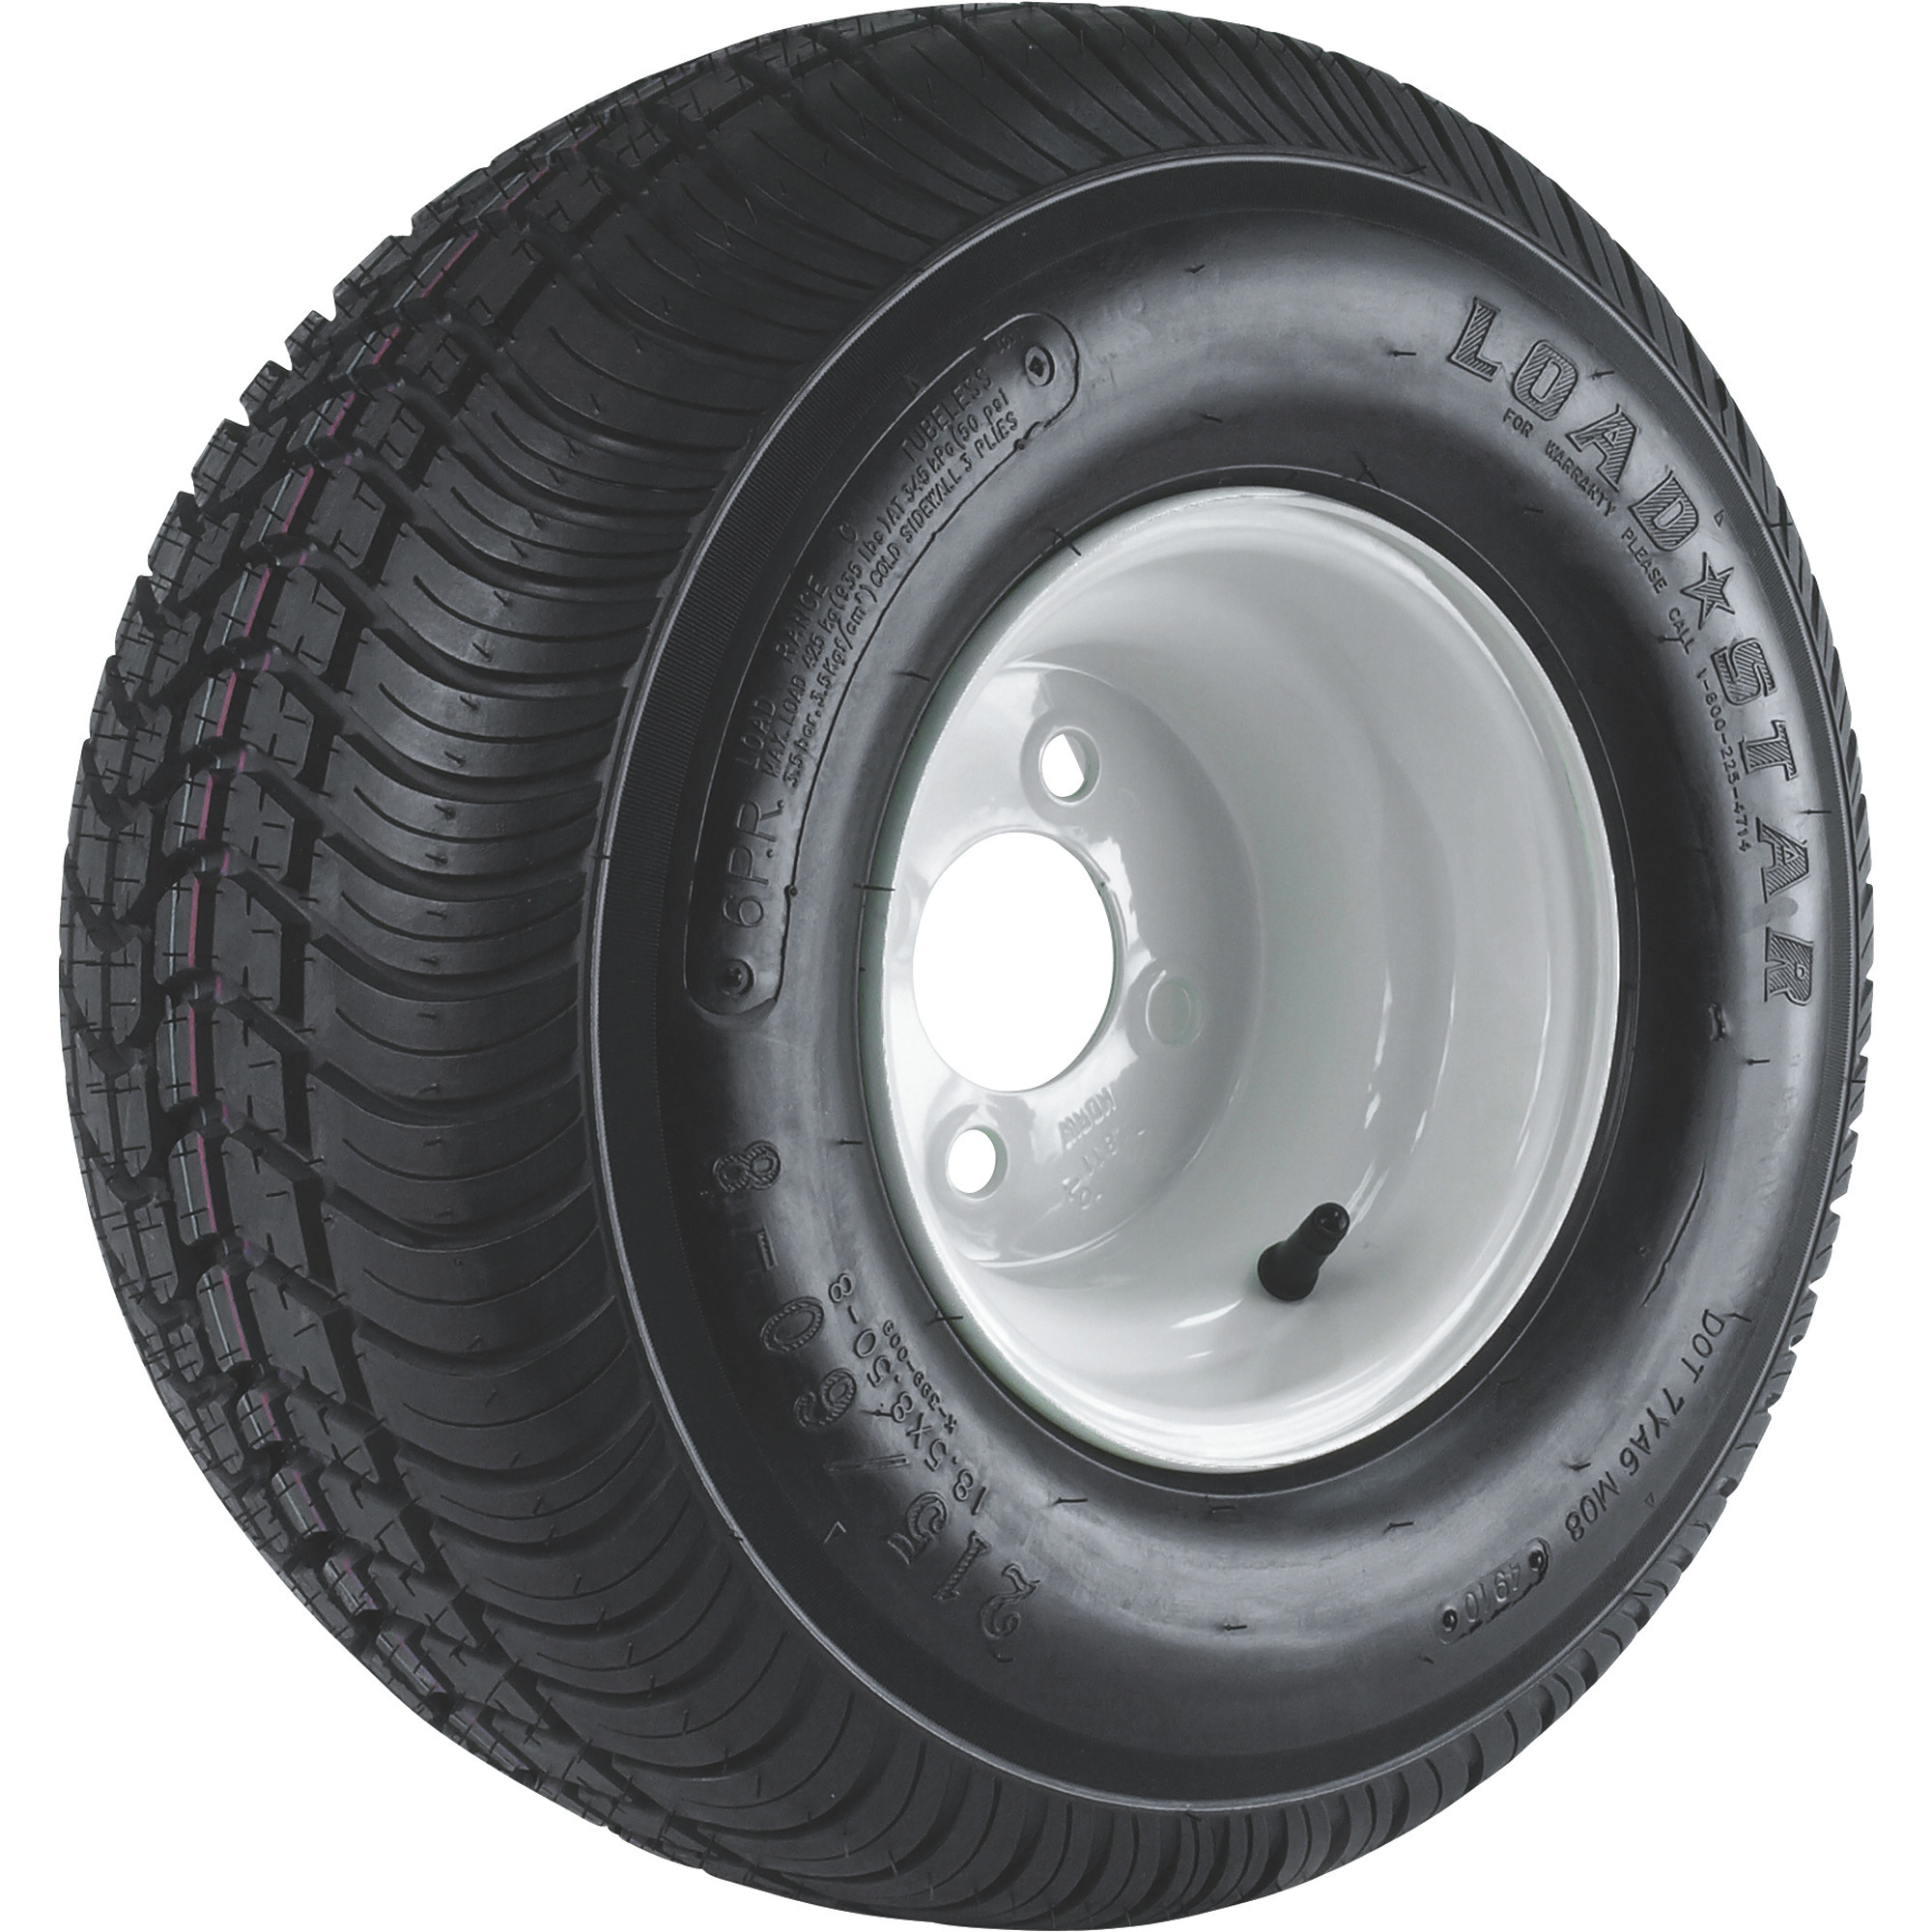 Kenda Loadstar 8Inch Bias-Ply Trailer Tire and Wheel Assembly â 215/60-8, 4-Hole, Load Range C, Model DM2568C-4I